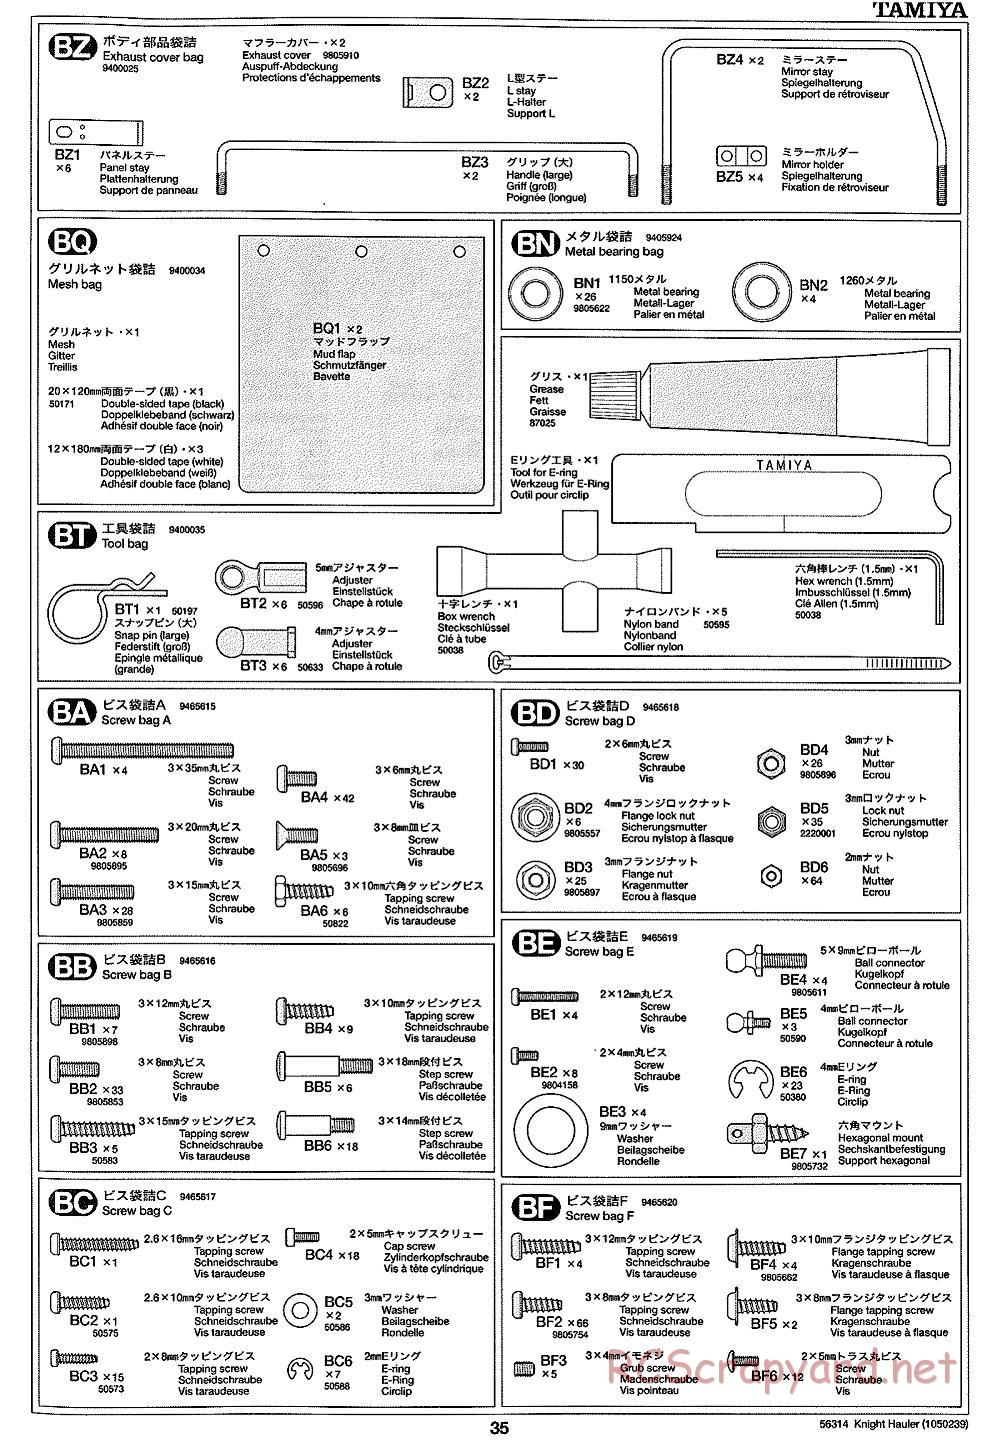 Tamiya - Knight Hauler Tractor Truck Chassis - Manual - Page 35